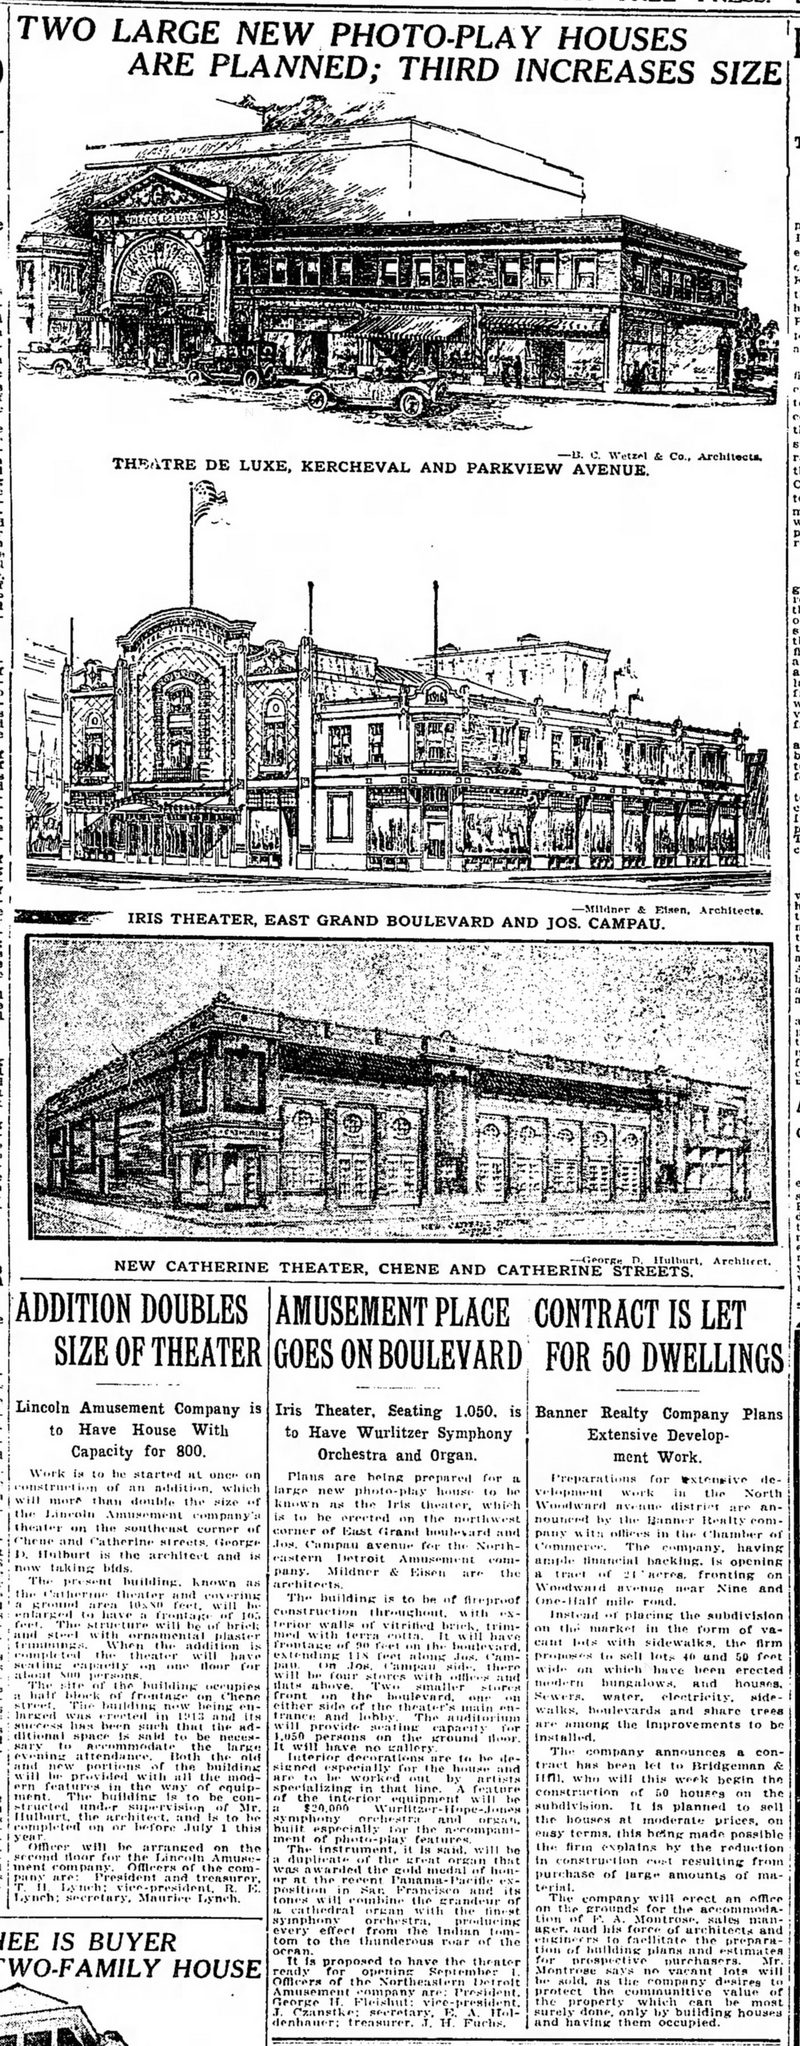 Mar 19 1916 article Deluxe Theatre, Detroit